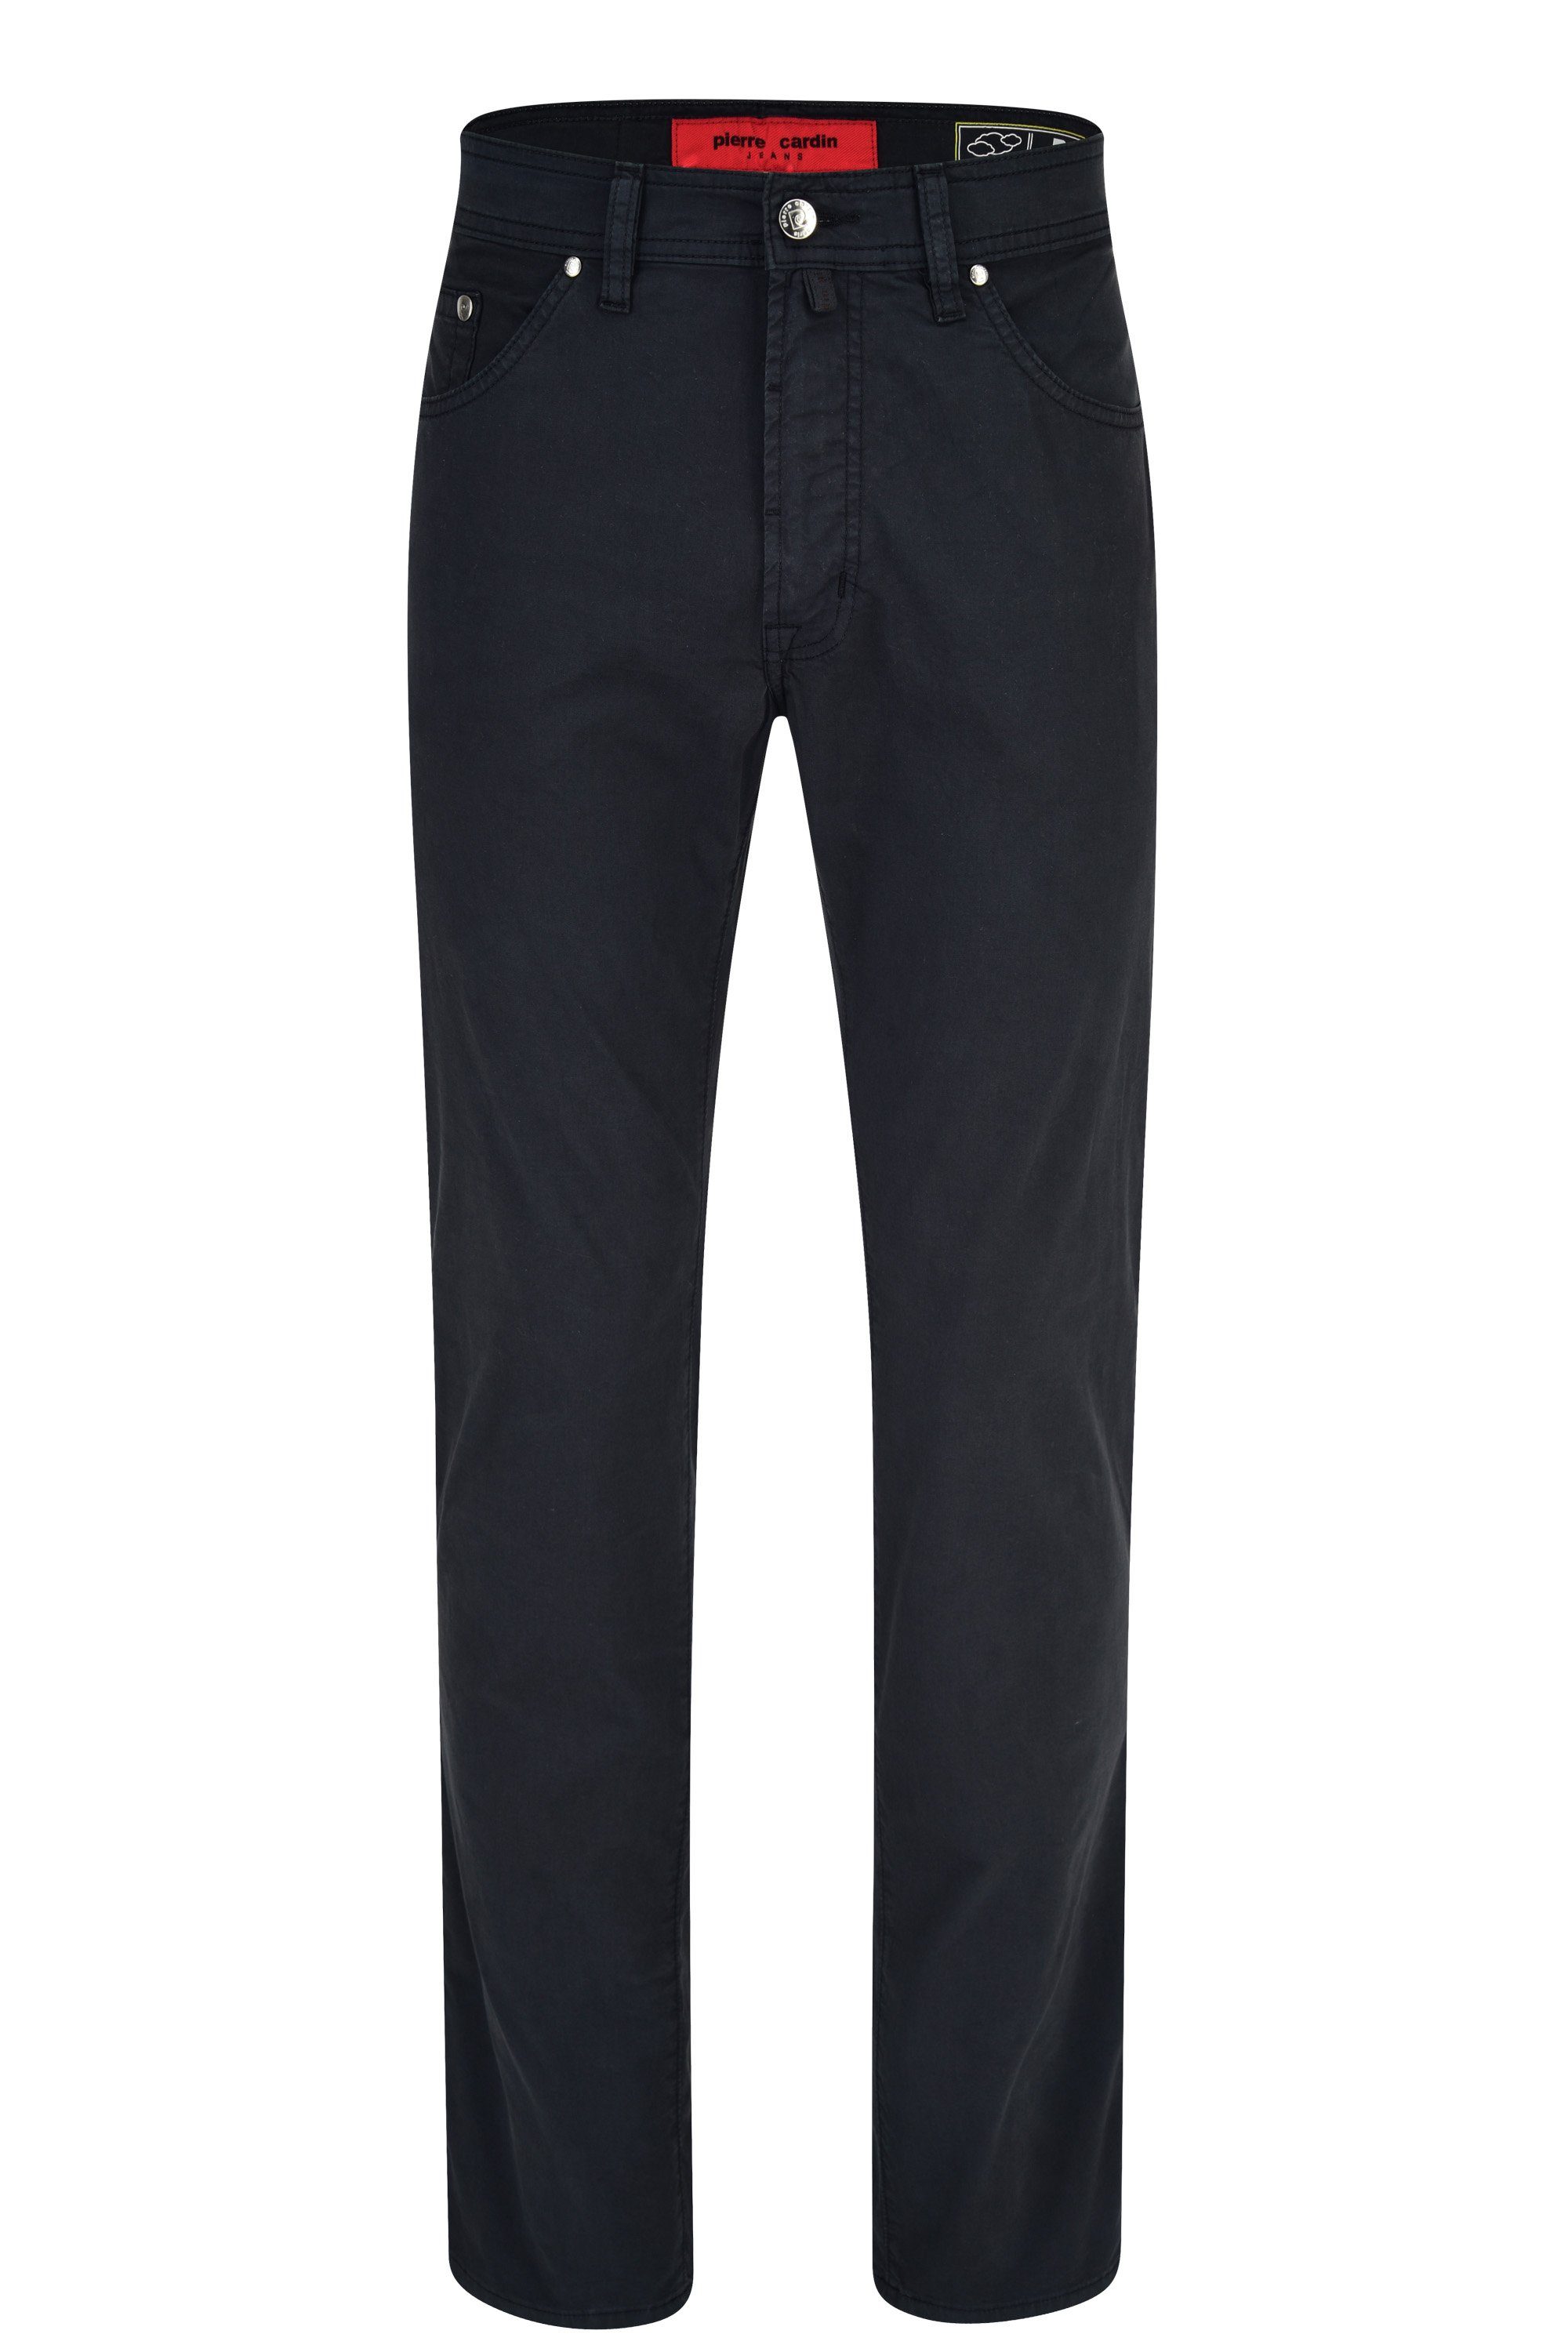 Pierre Cardin 5-Pocket-Jeans »PIERRE CARDIN DEAUVILLE summer air touch dark«